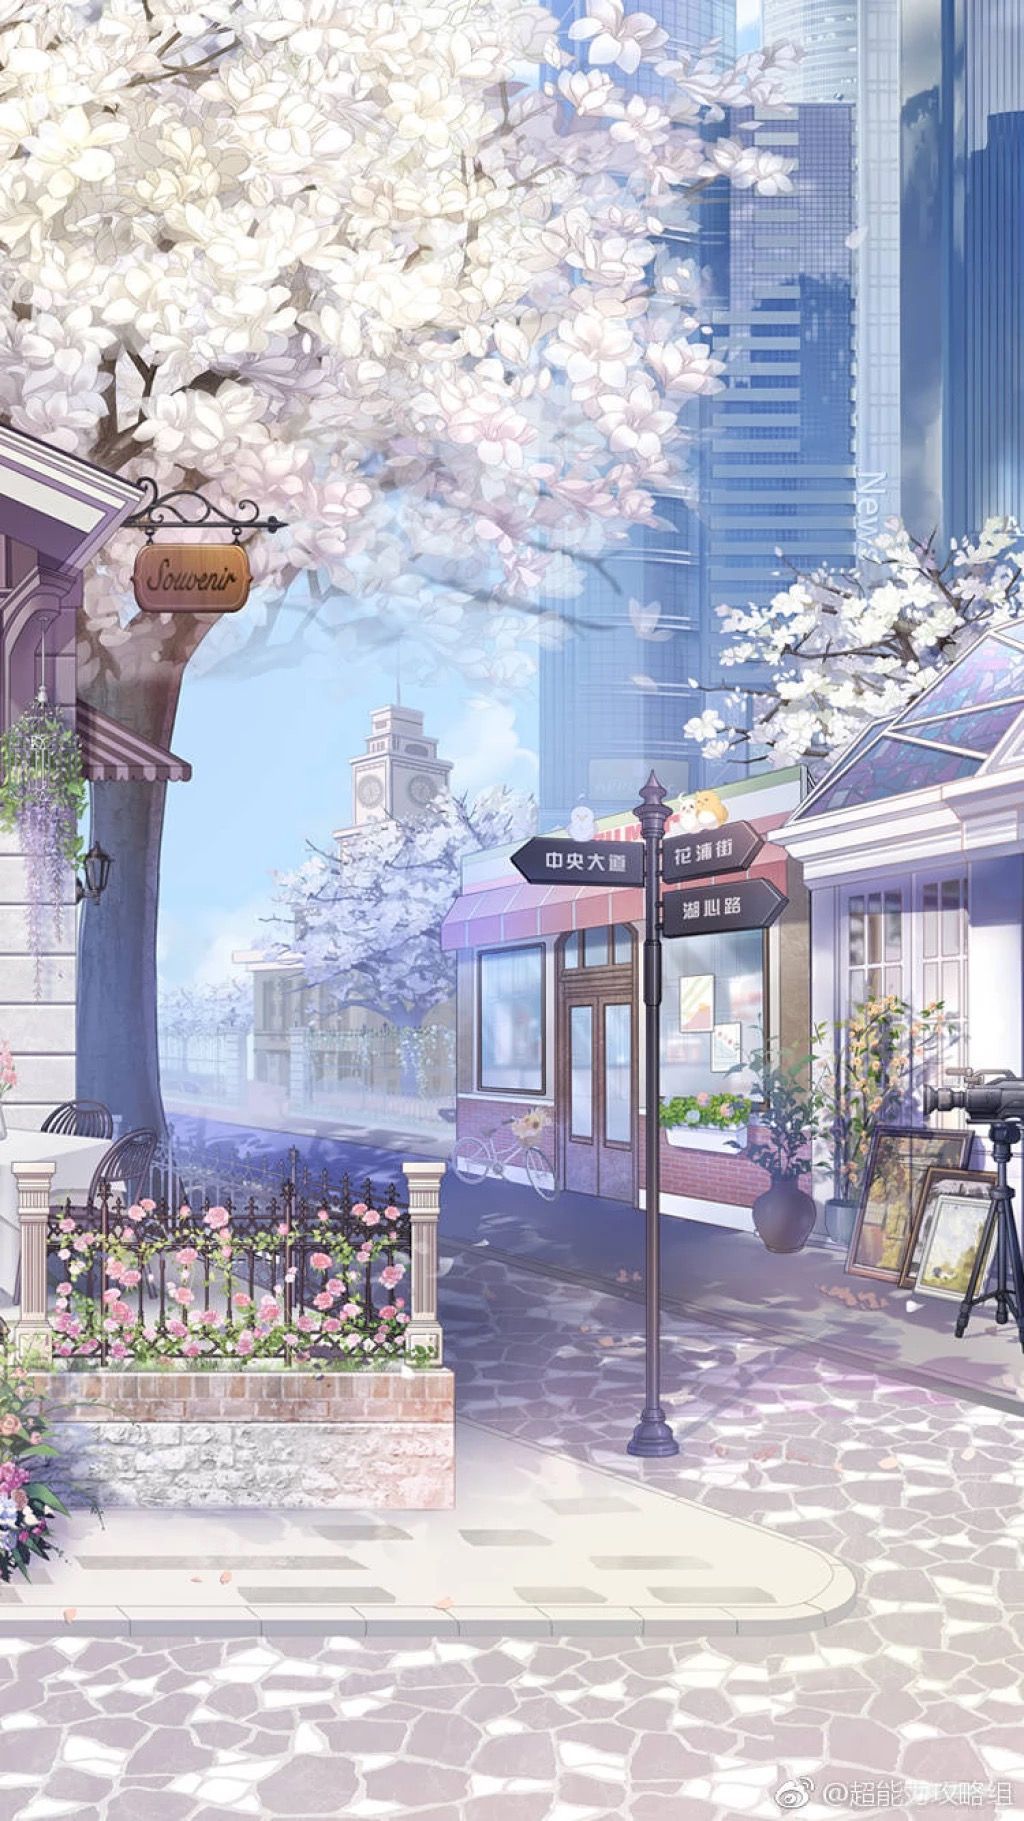 Anime scenery wallpaper, Anime scenery .com